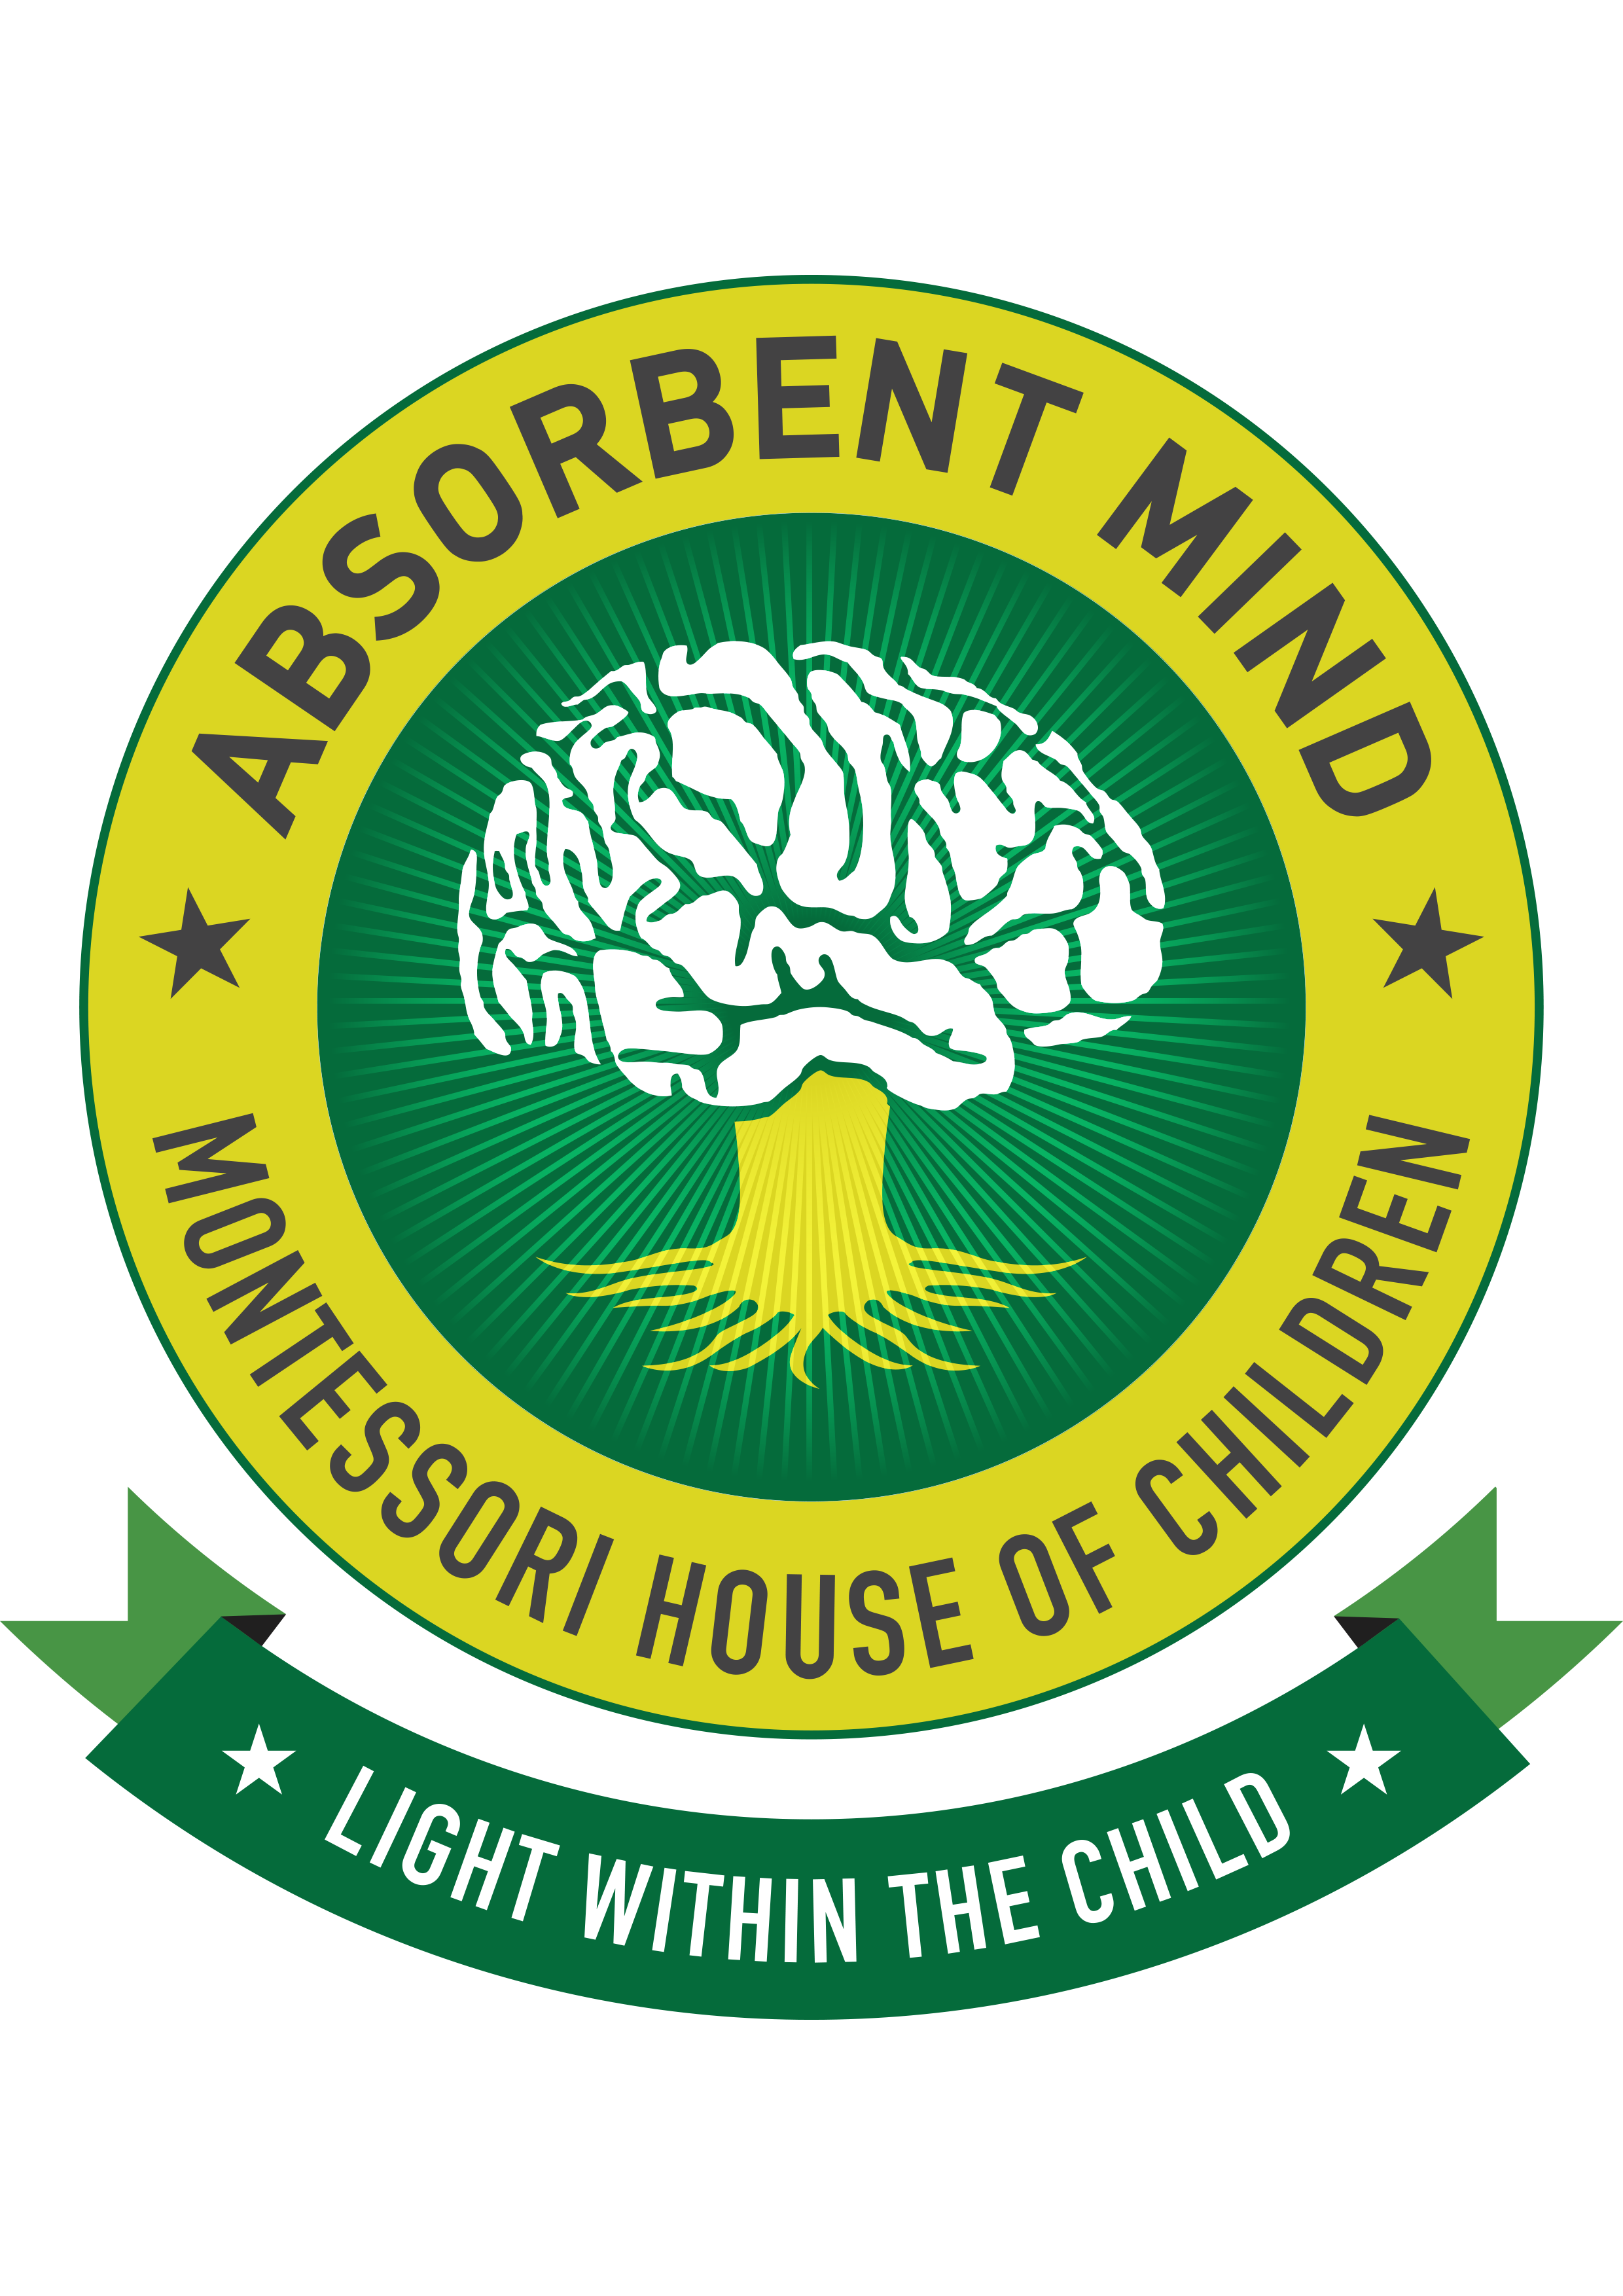 Absorbent Mind Montessori School